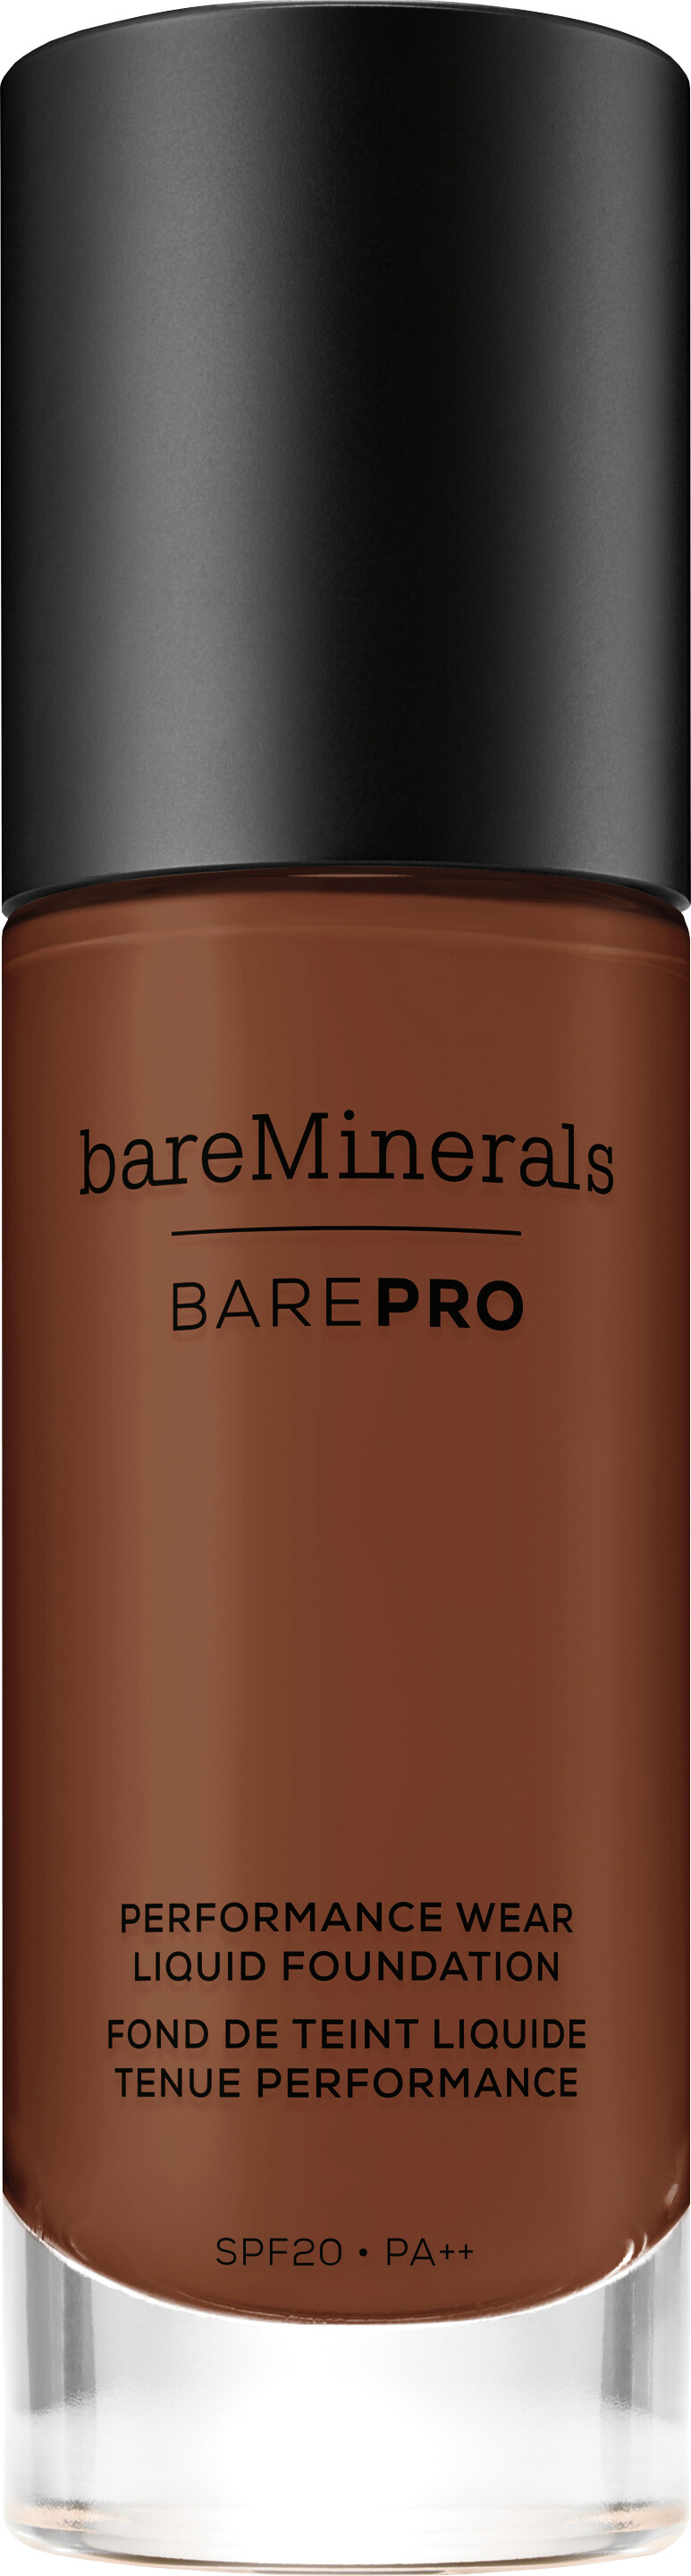 bareMinerals BAREPRO Performance Wear Liquid Foundation SPF20 30ml 31 - Mocha